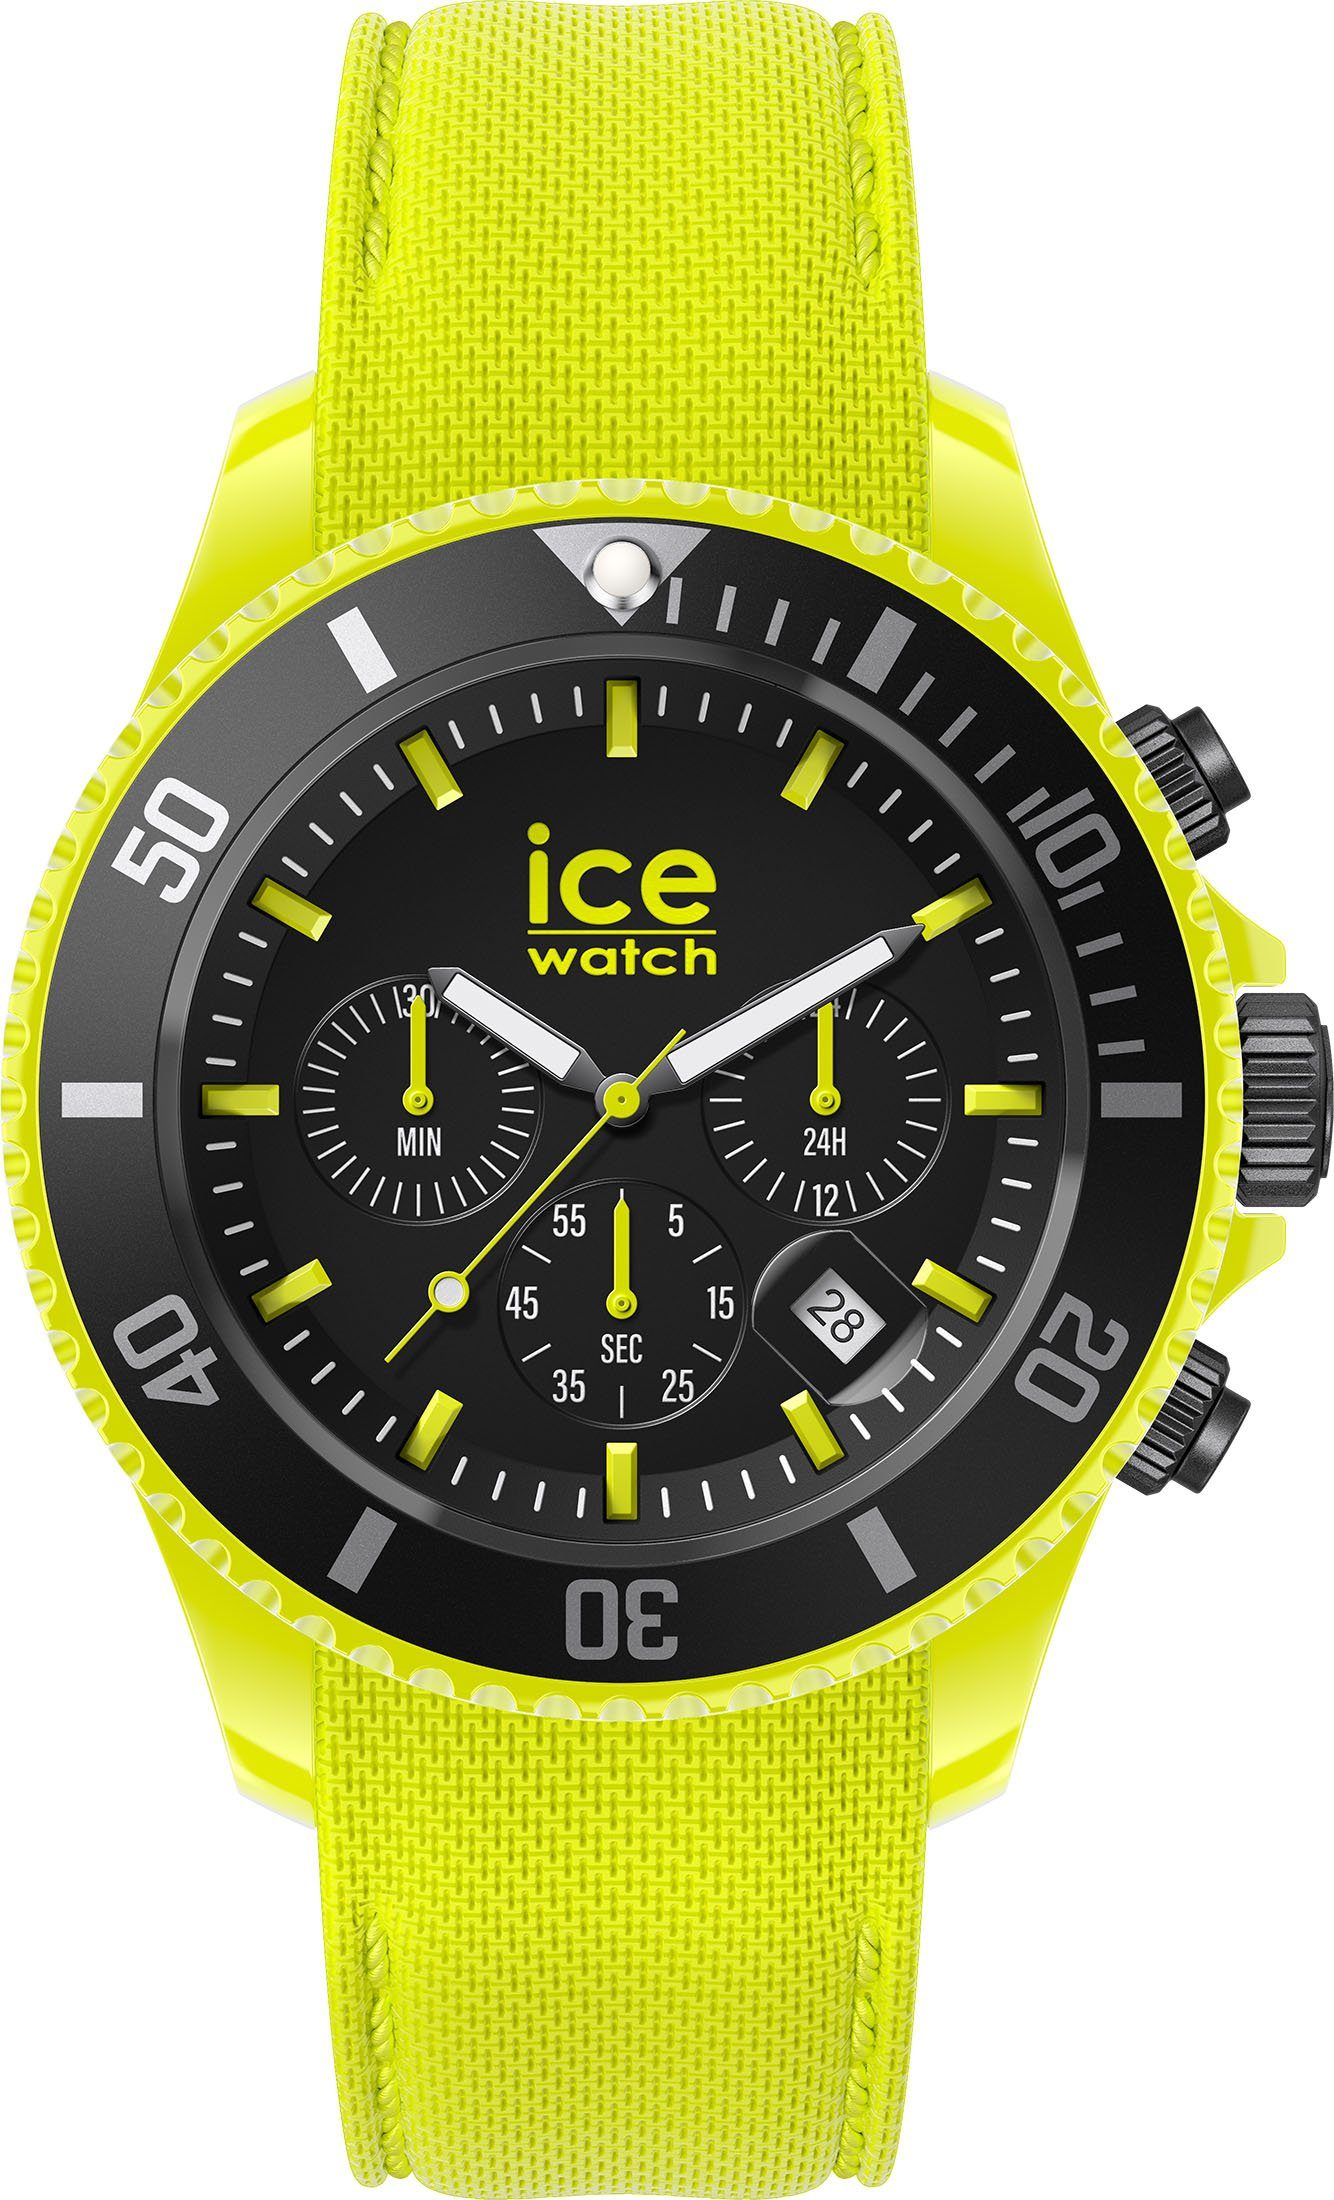 Large yellow Kunststoff, Neon ice-watch 44 Gehäuse mm Chronograph Gehäuse-Ø CH, aus - ca. 019838, chrono - - ICE